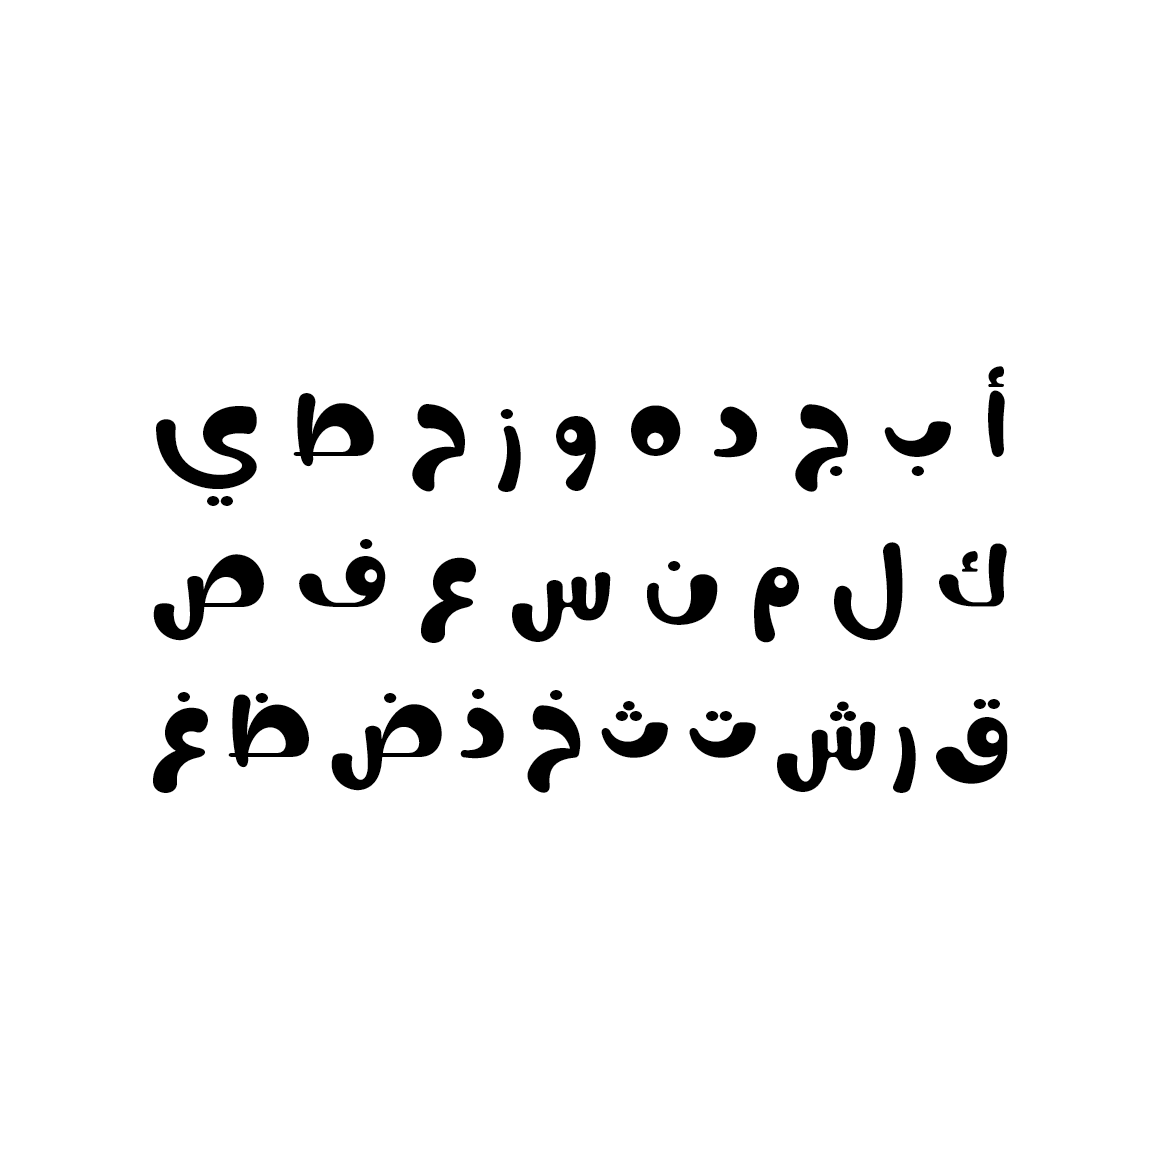 Nokta - Arabic Font pinterest image.